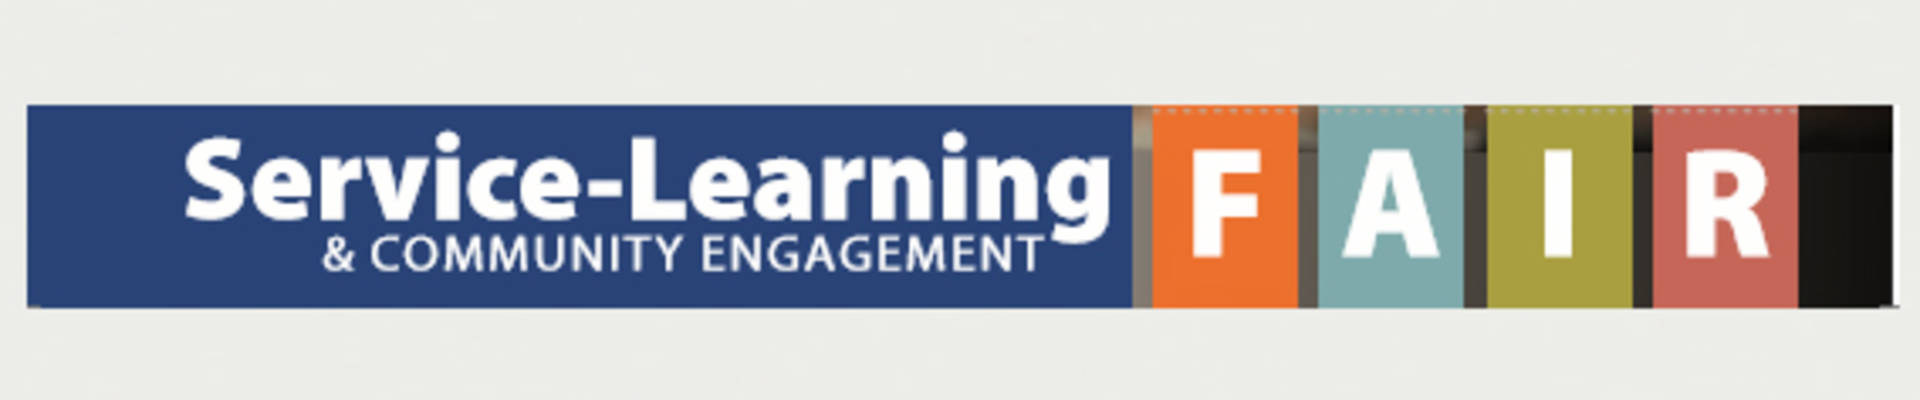 Service-learning community engagement fair logo